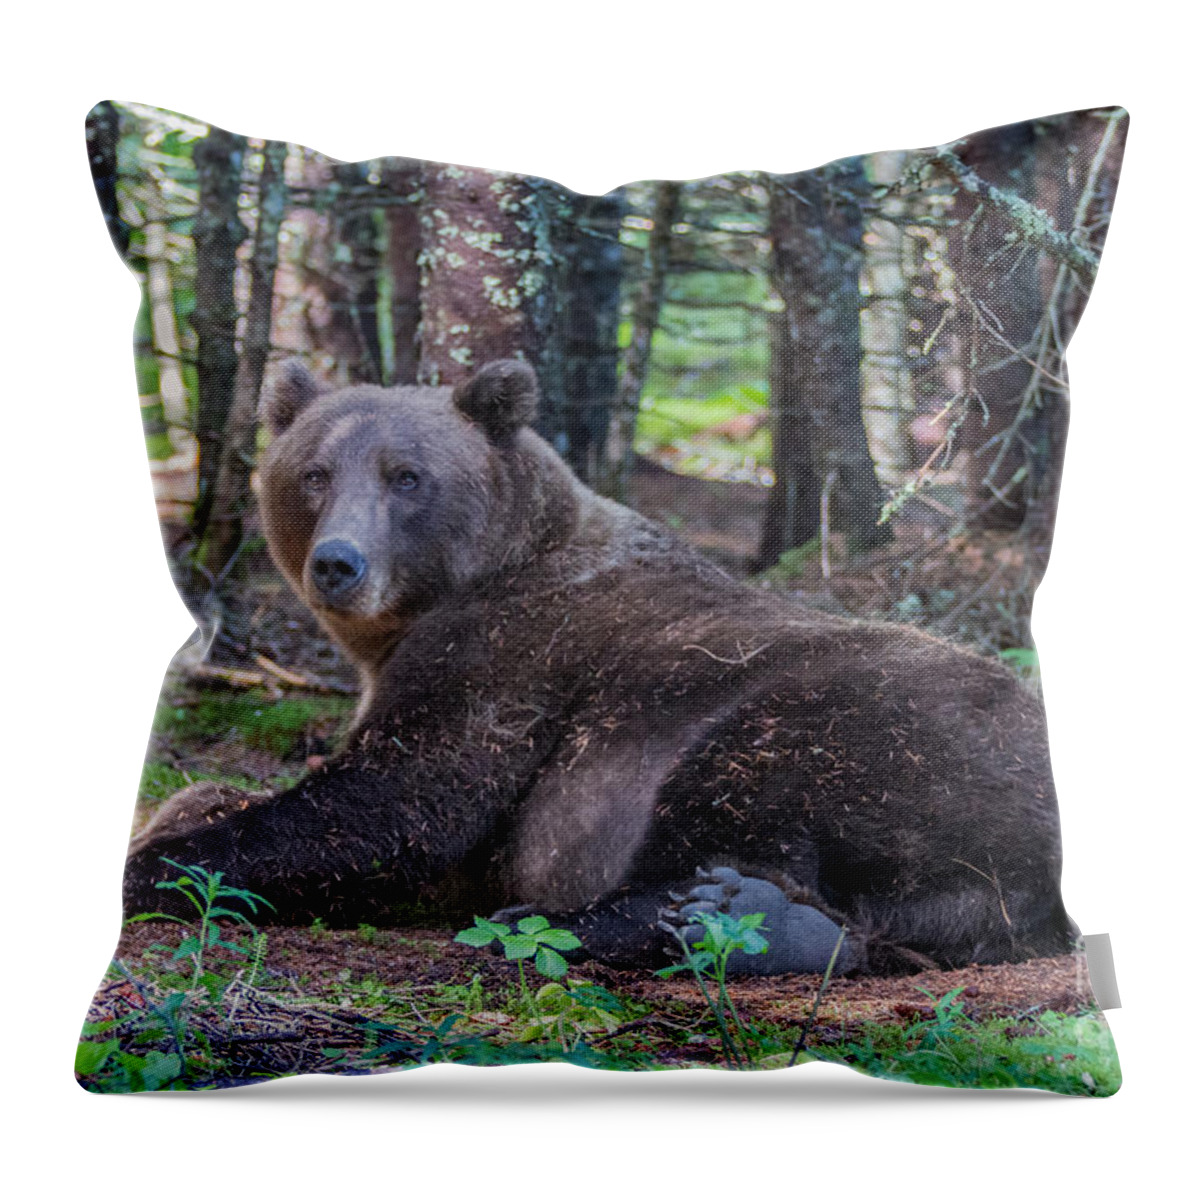 Bear Throw Pillow featuring the photograph Forest Bear by Chris Scroggins